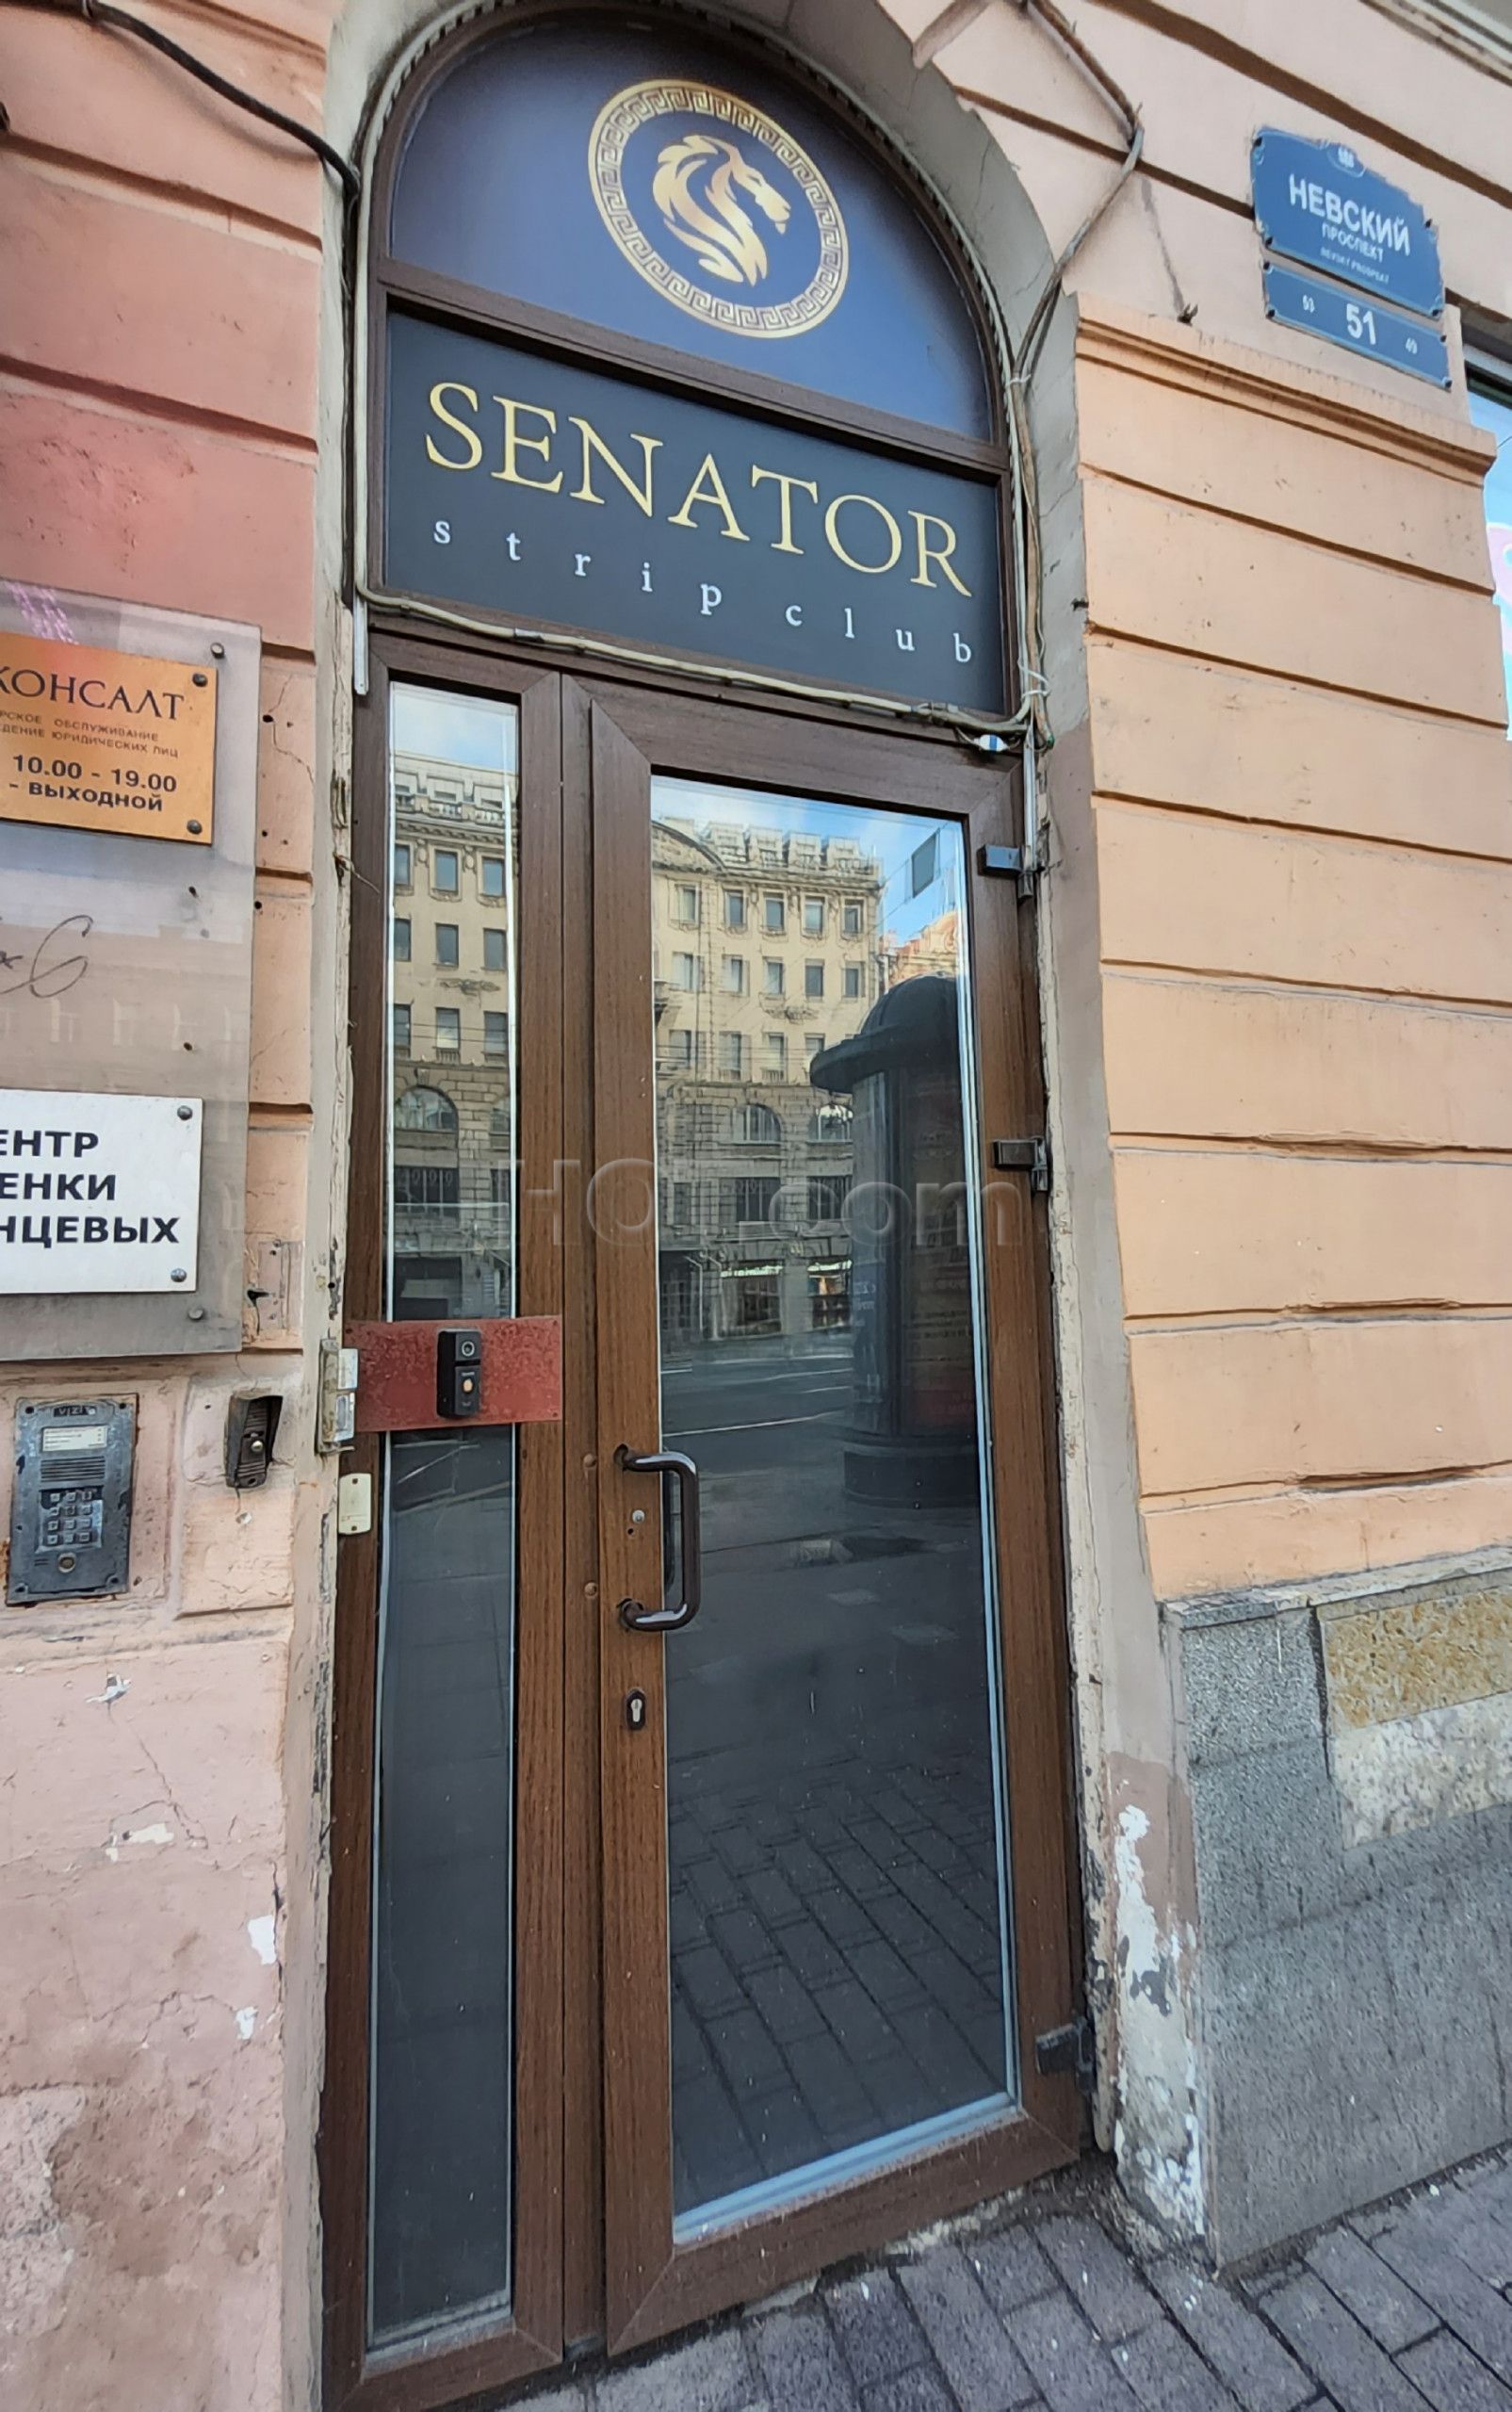 Saint Petersburg, Russia Senator